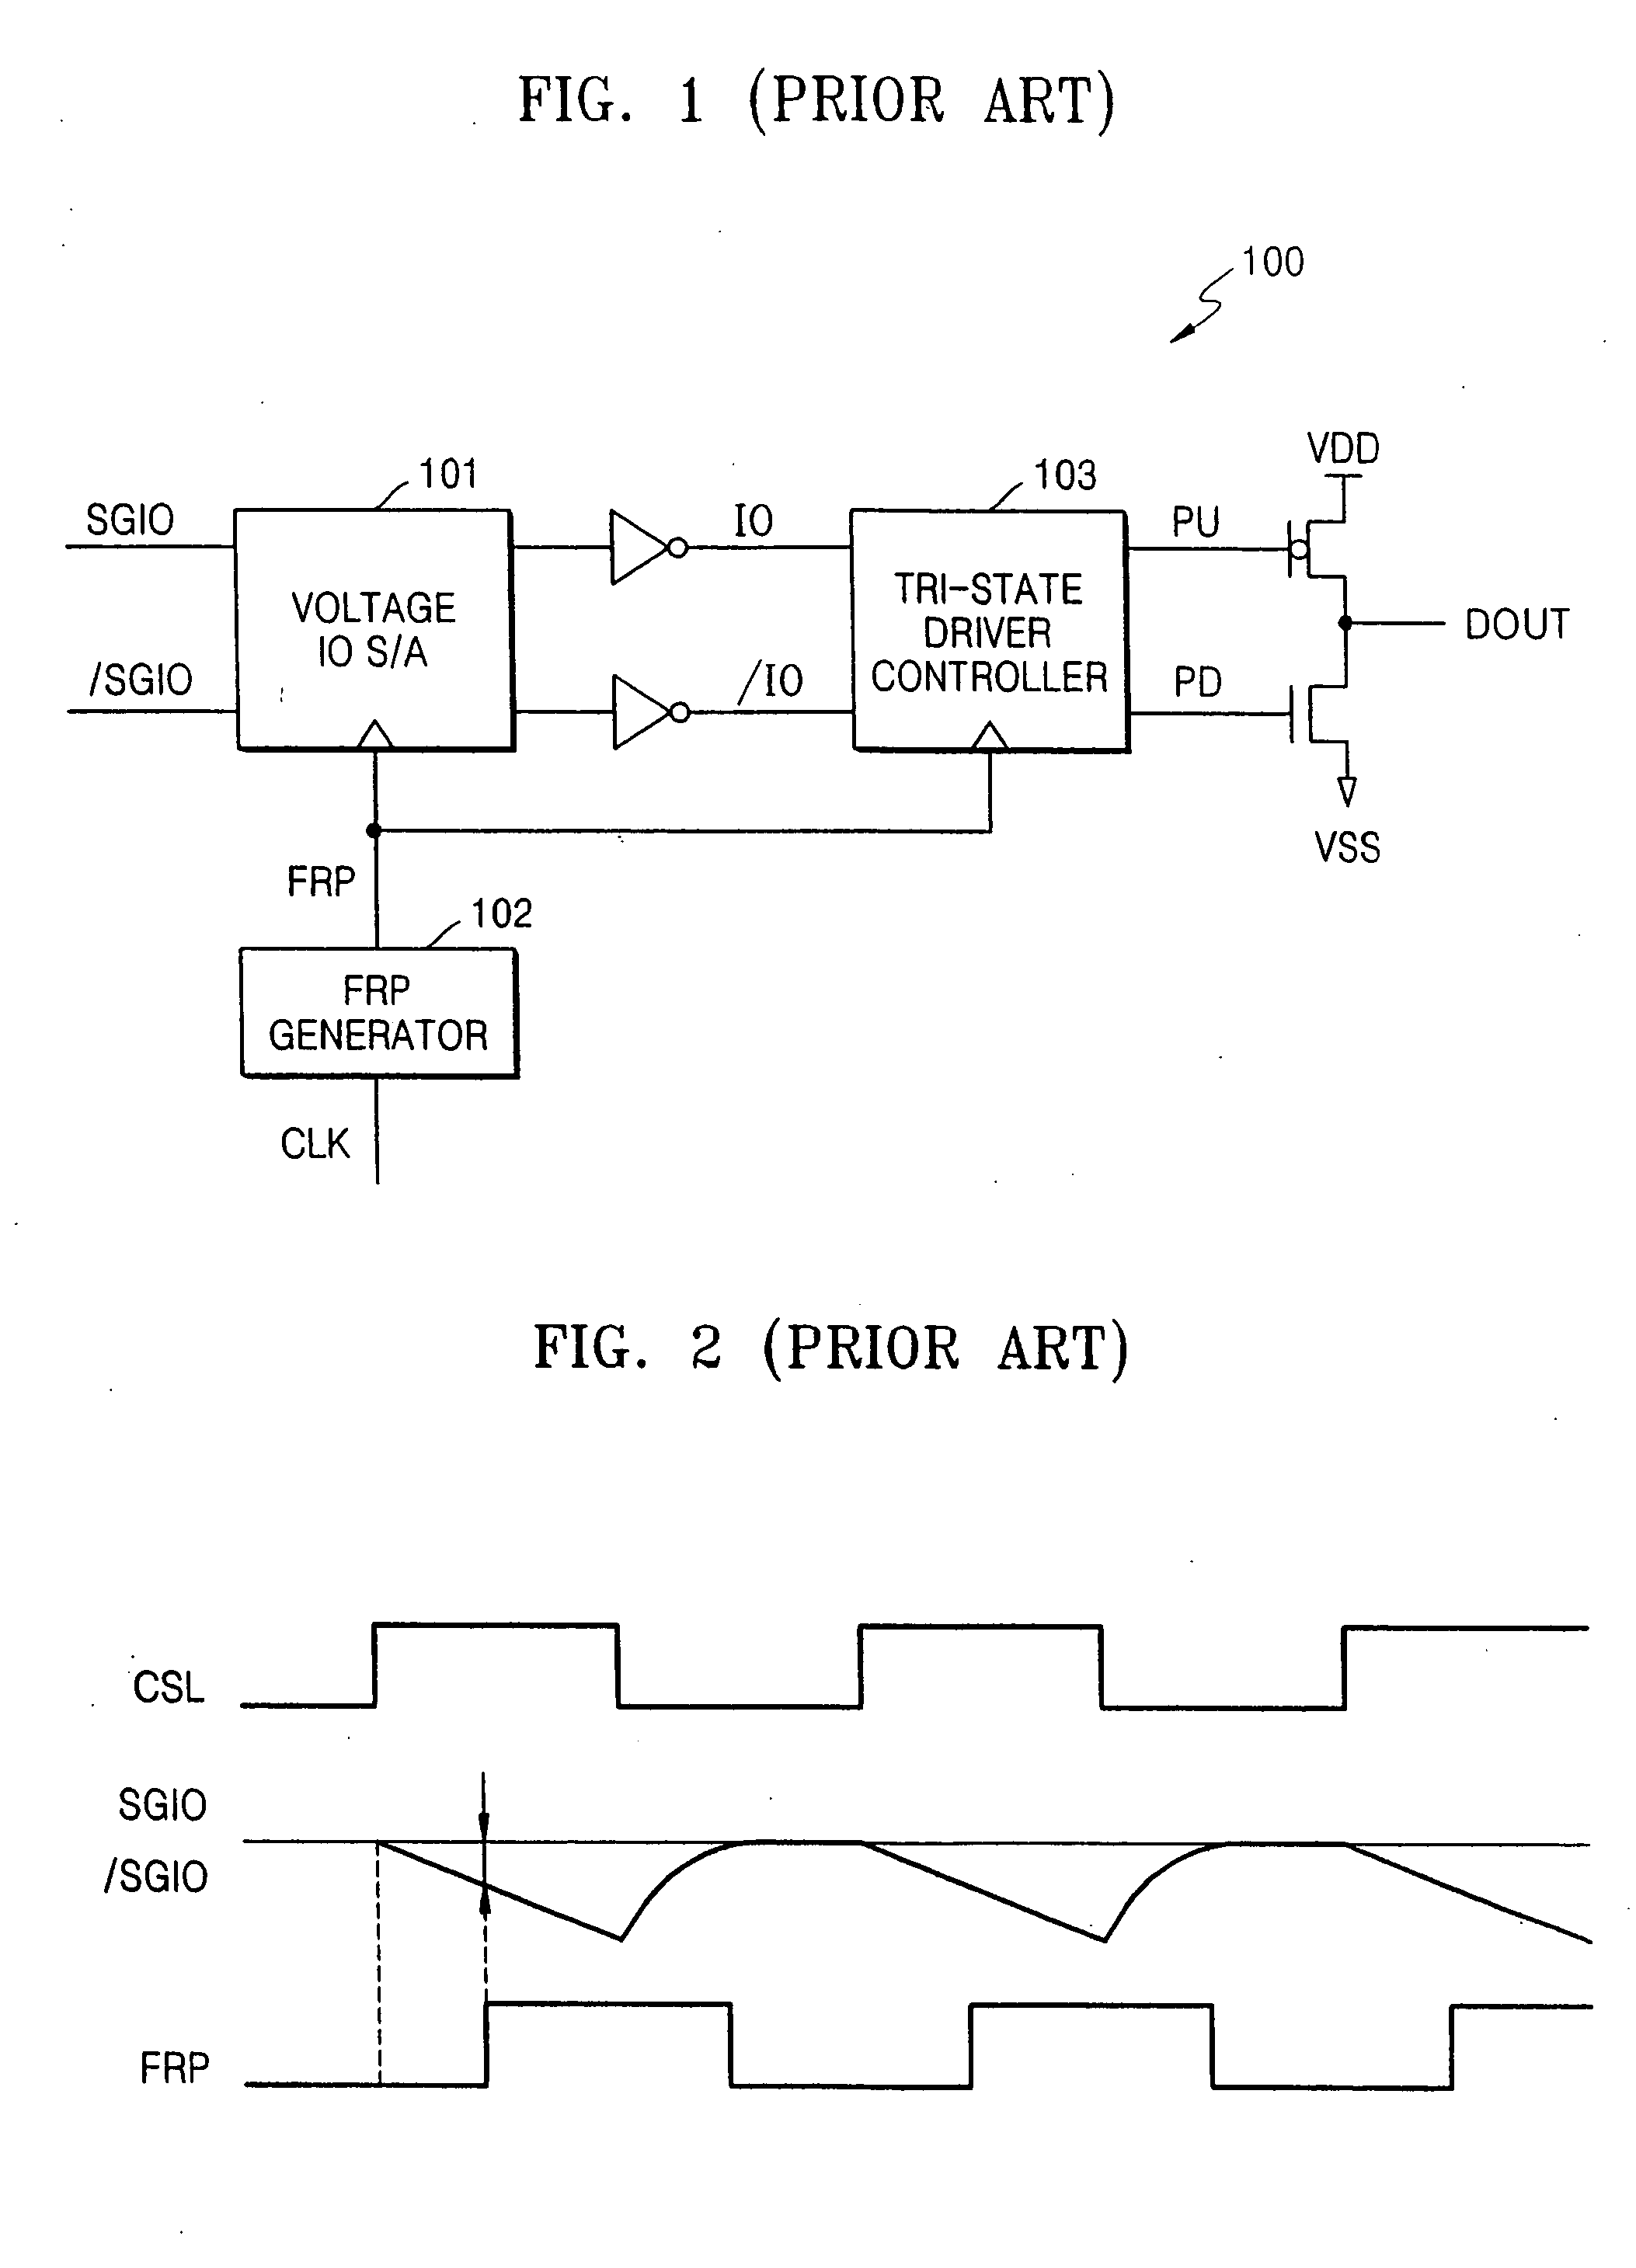 Semiconductor device having input/output sense amplifier for multiple sampling